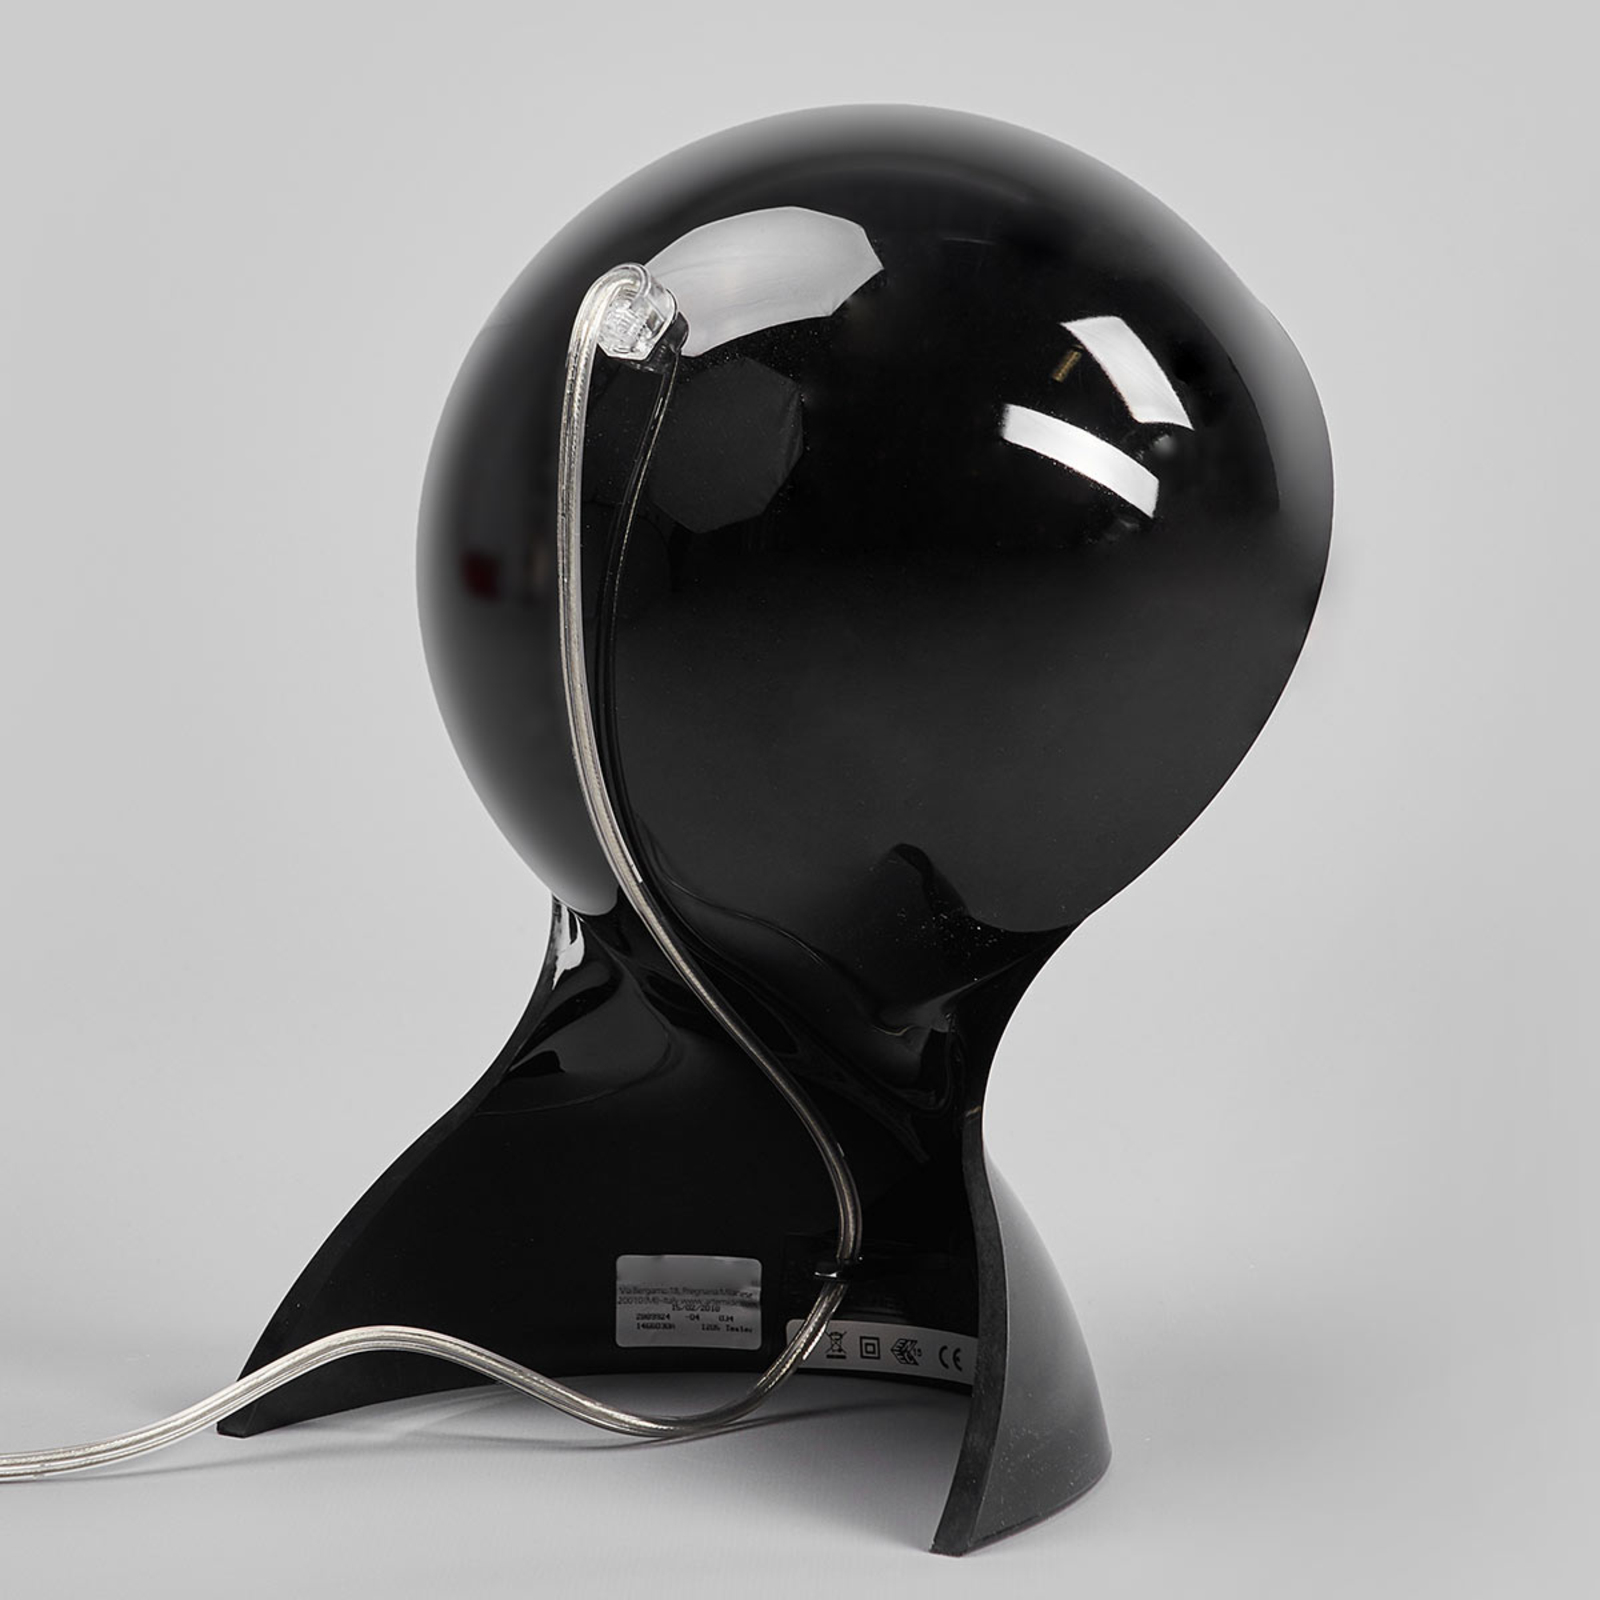 Artemide Dalù designerbordslampa i svart